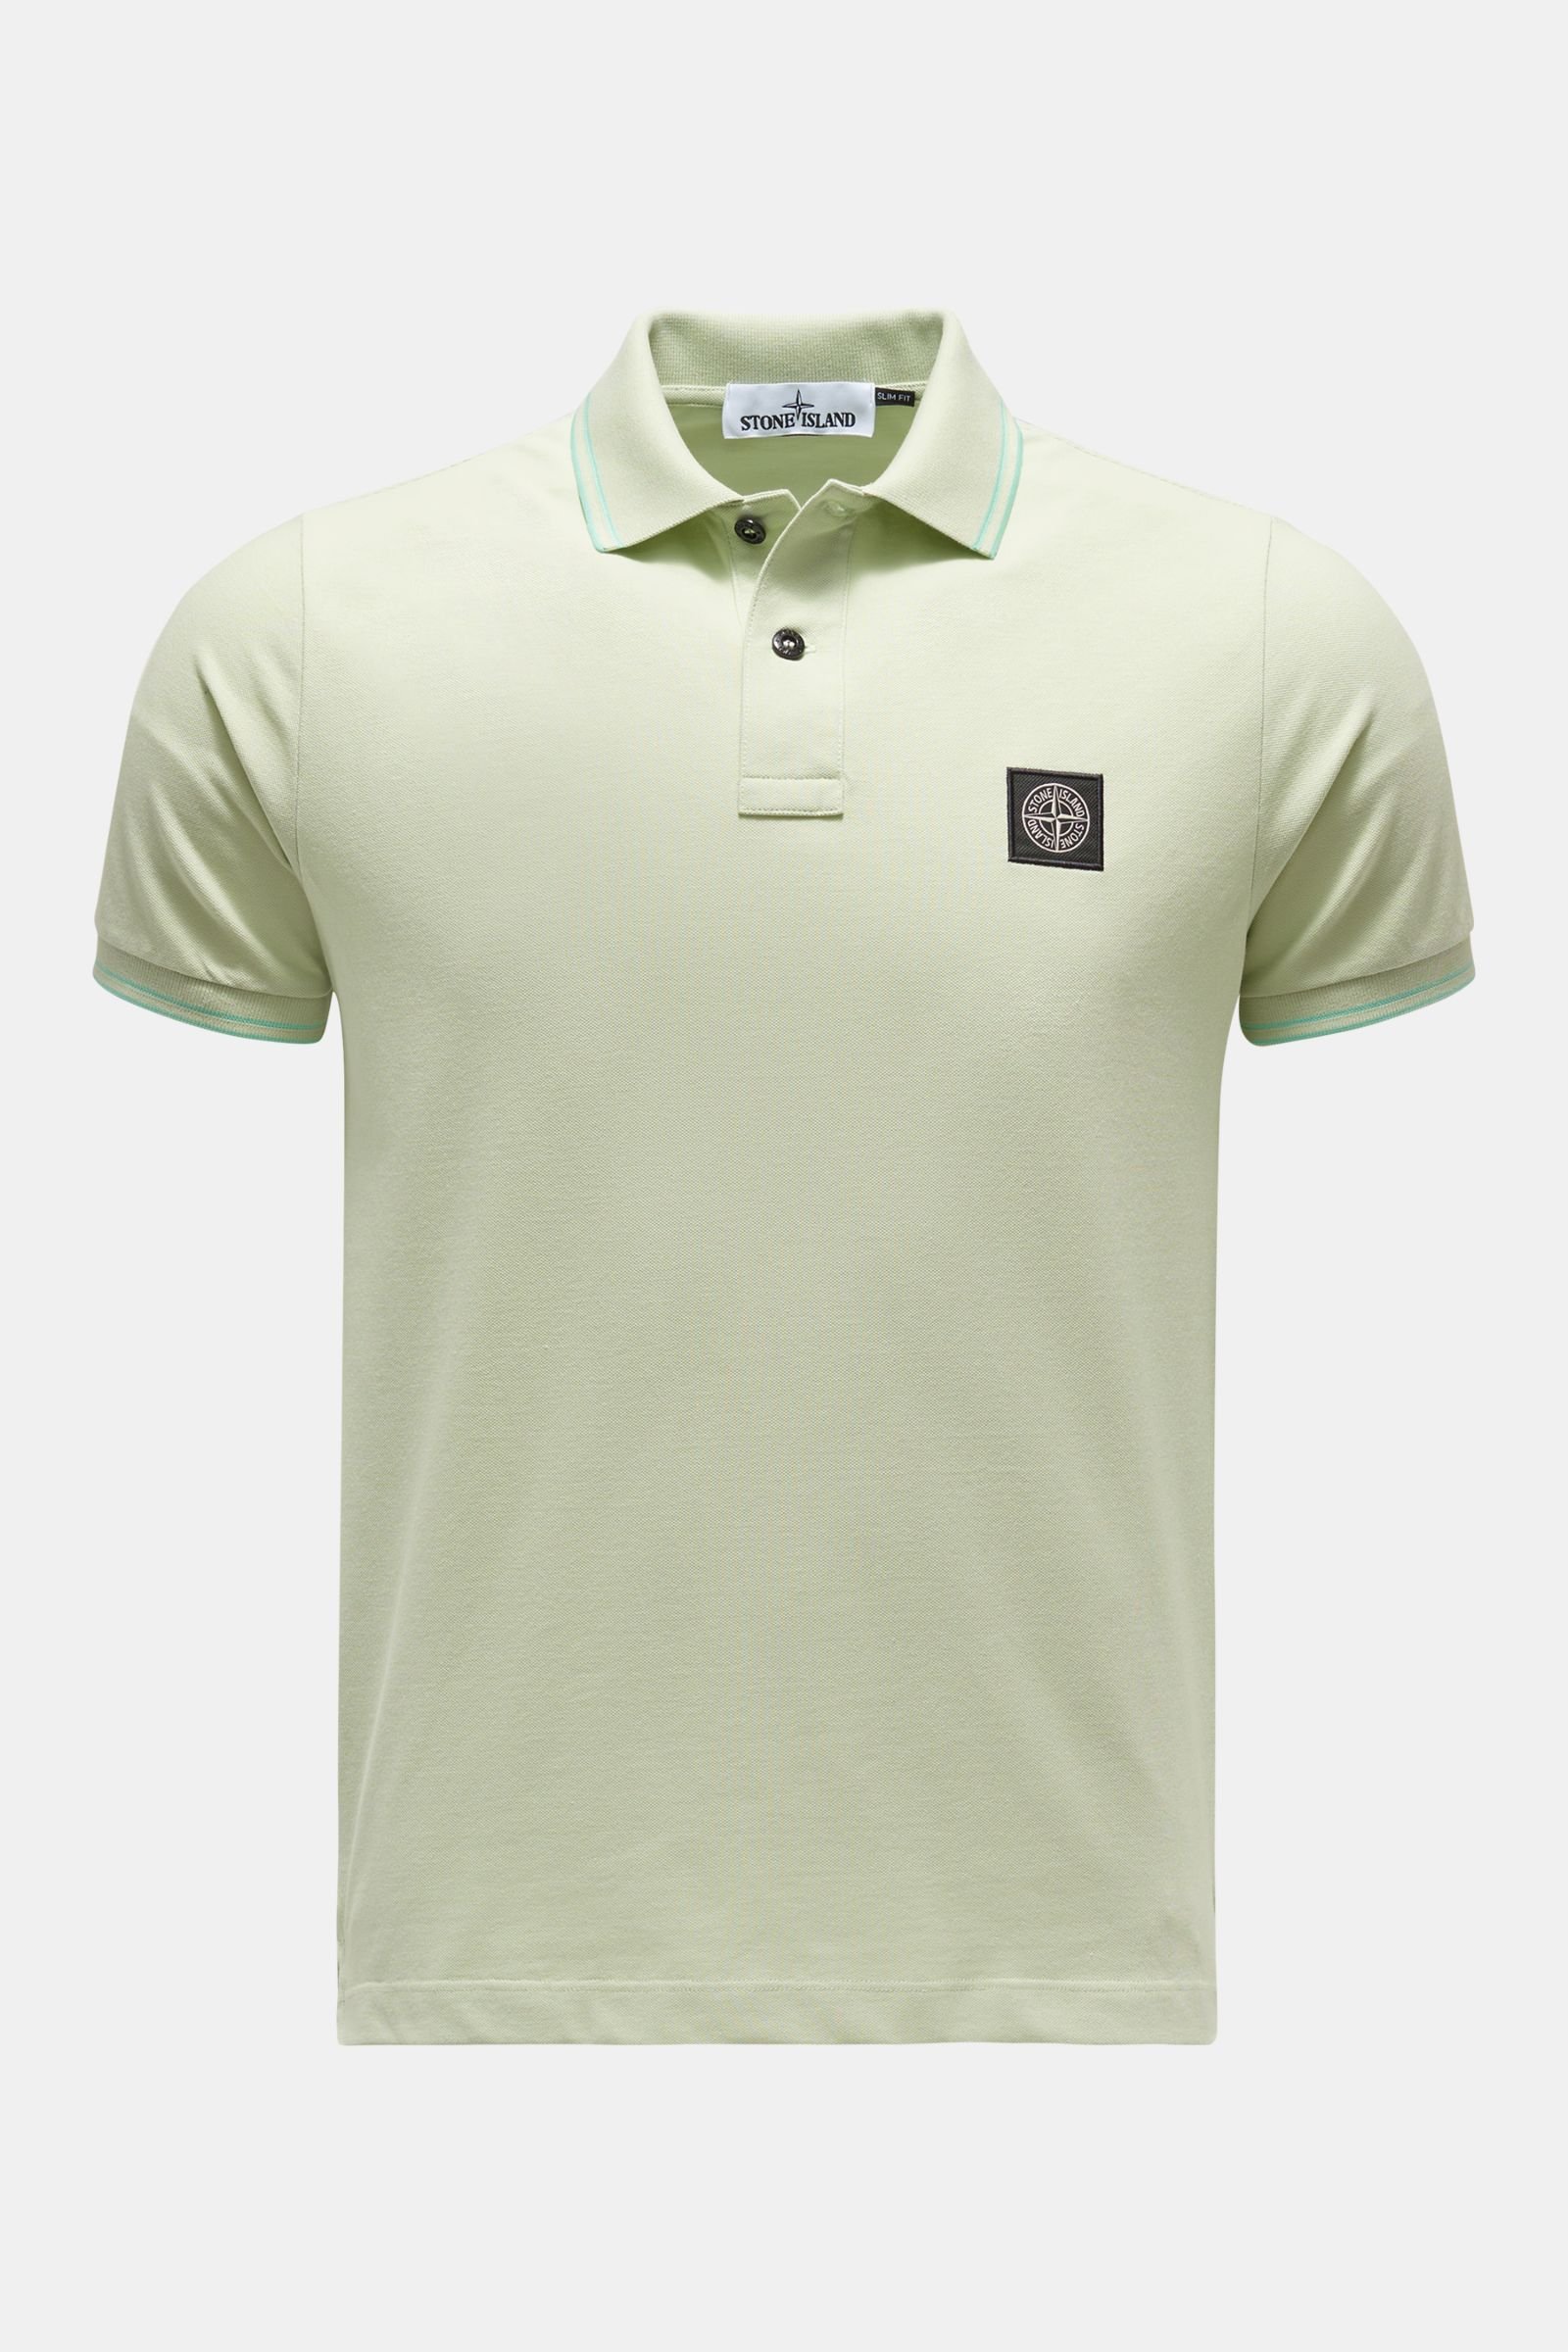 Polo shirt light green